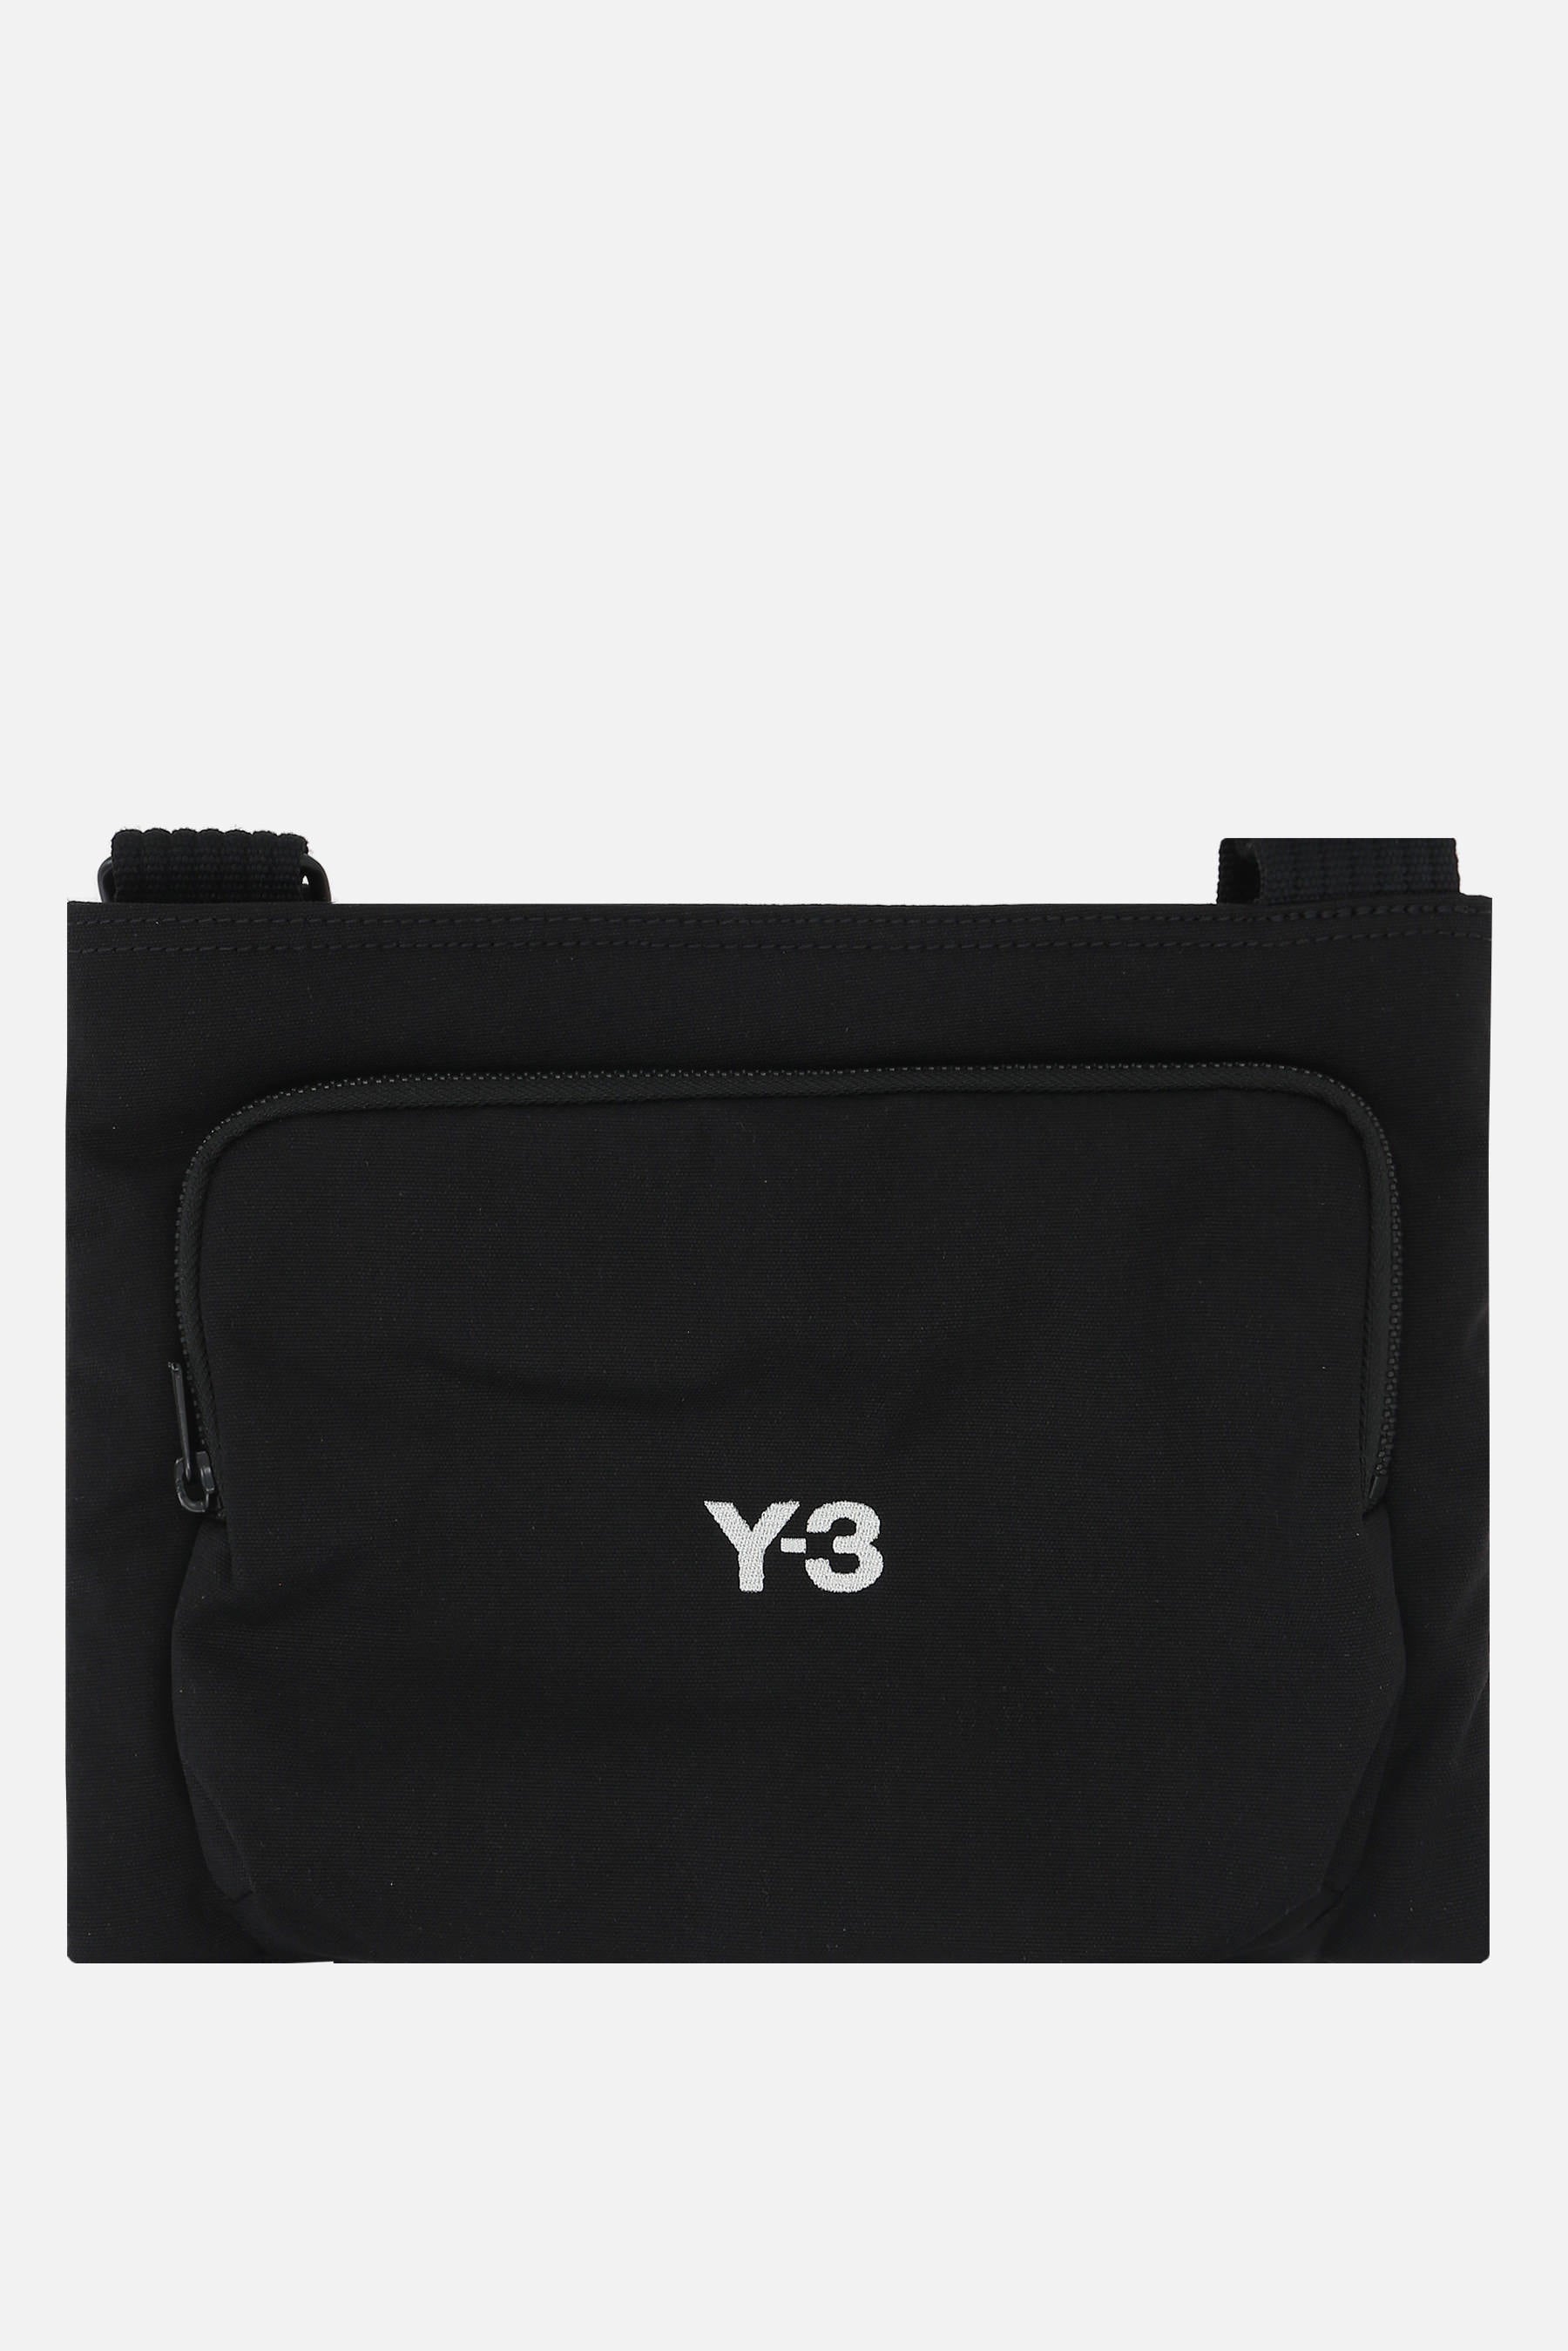 Y-3 nylon crossbody bag